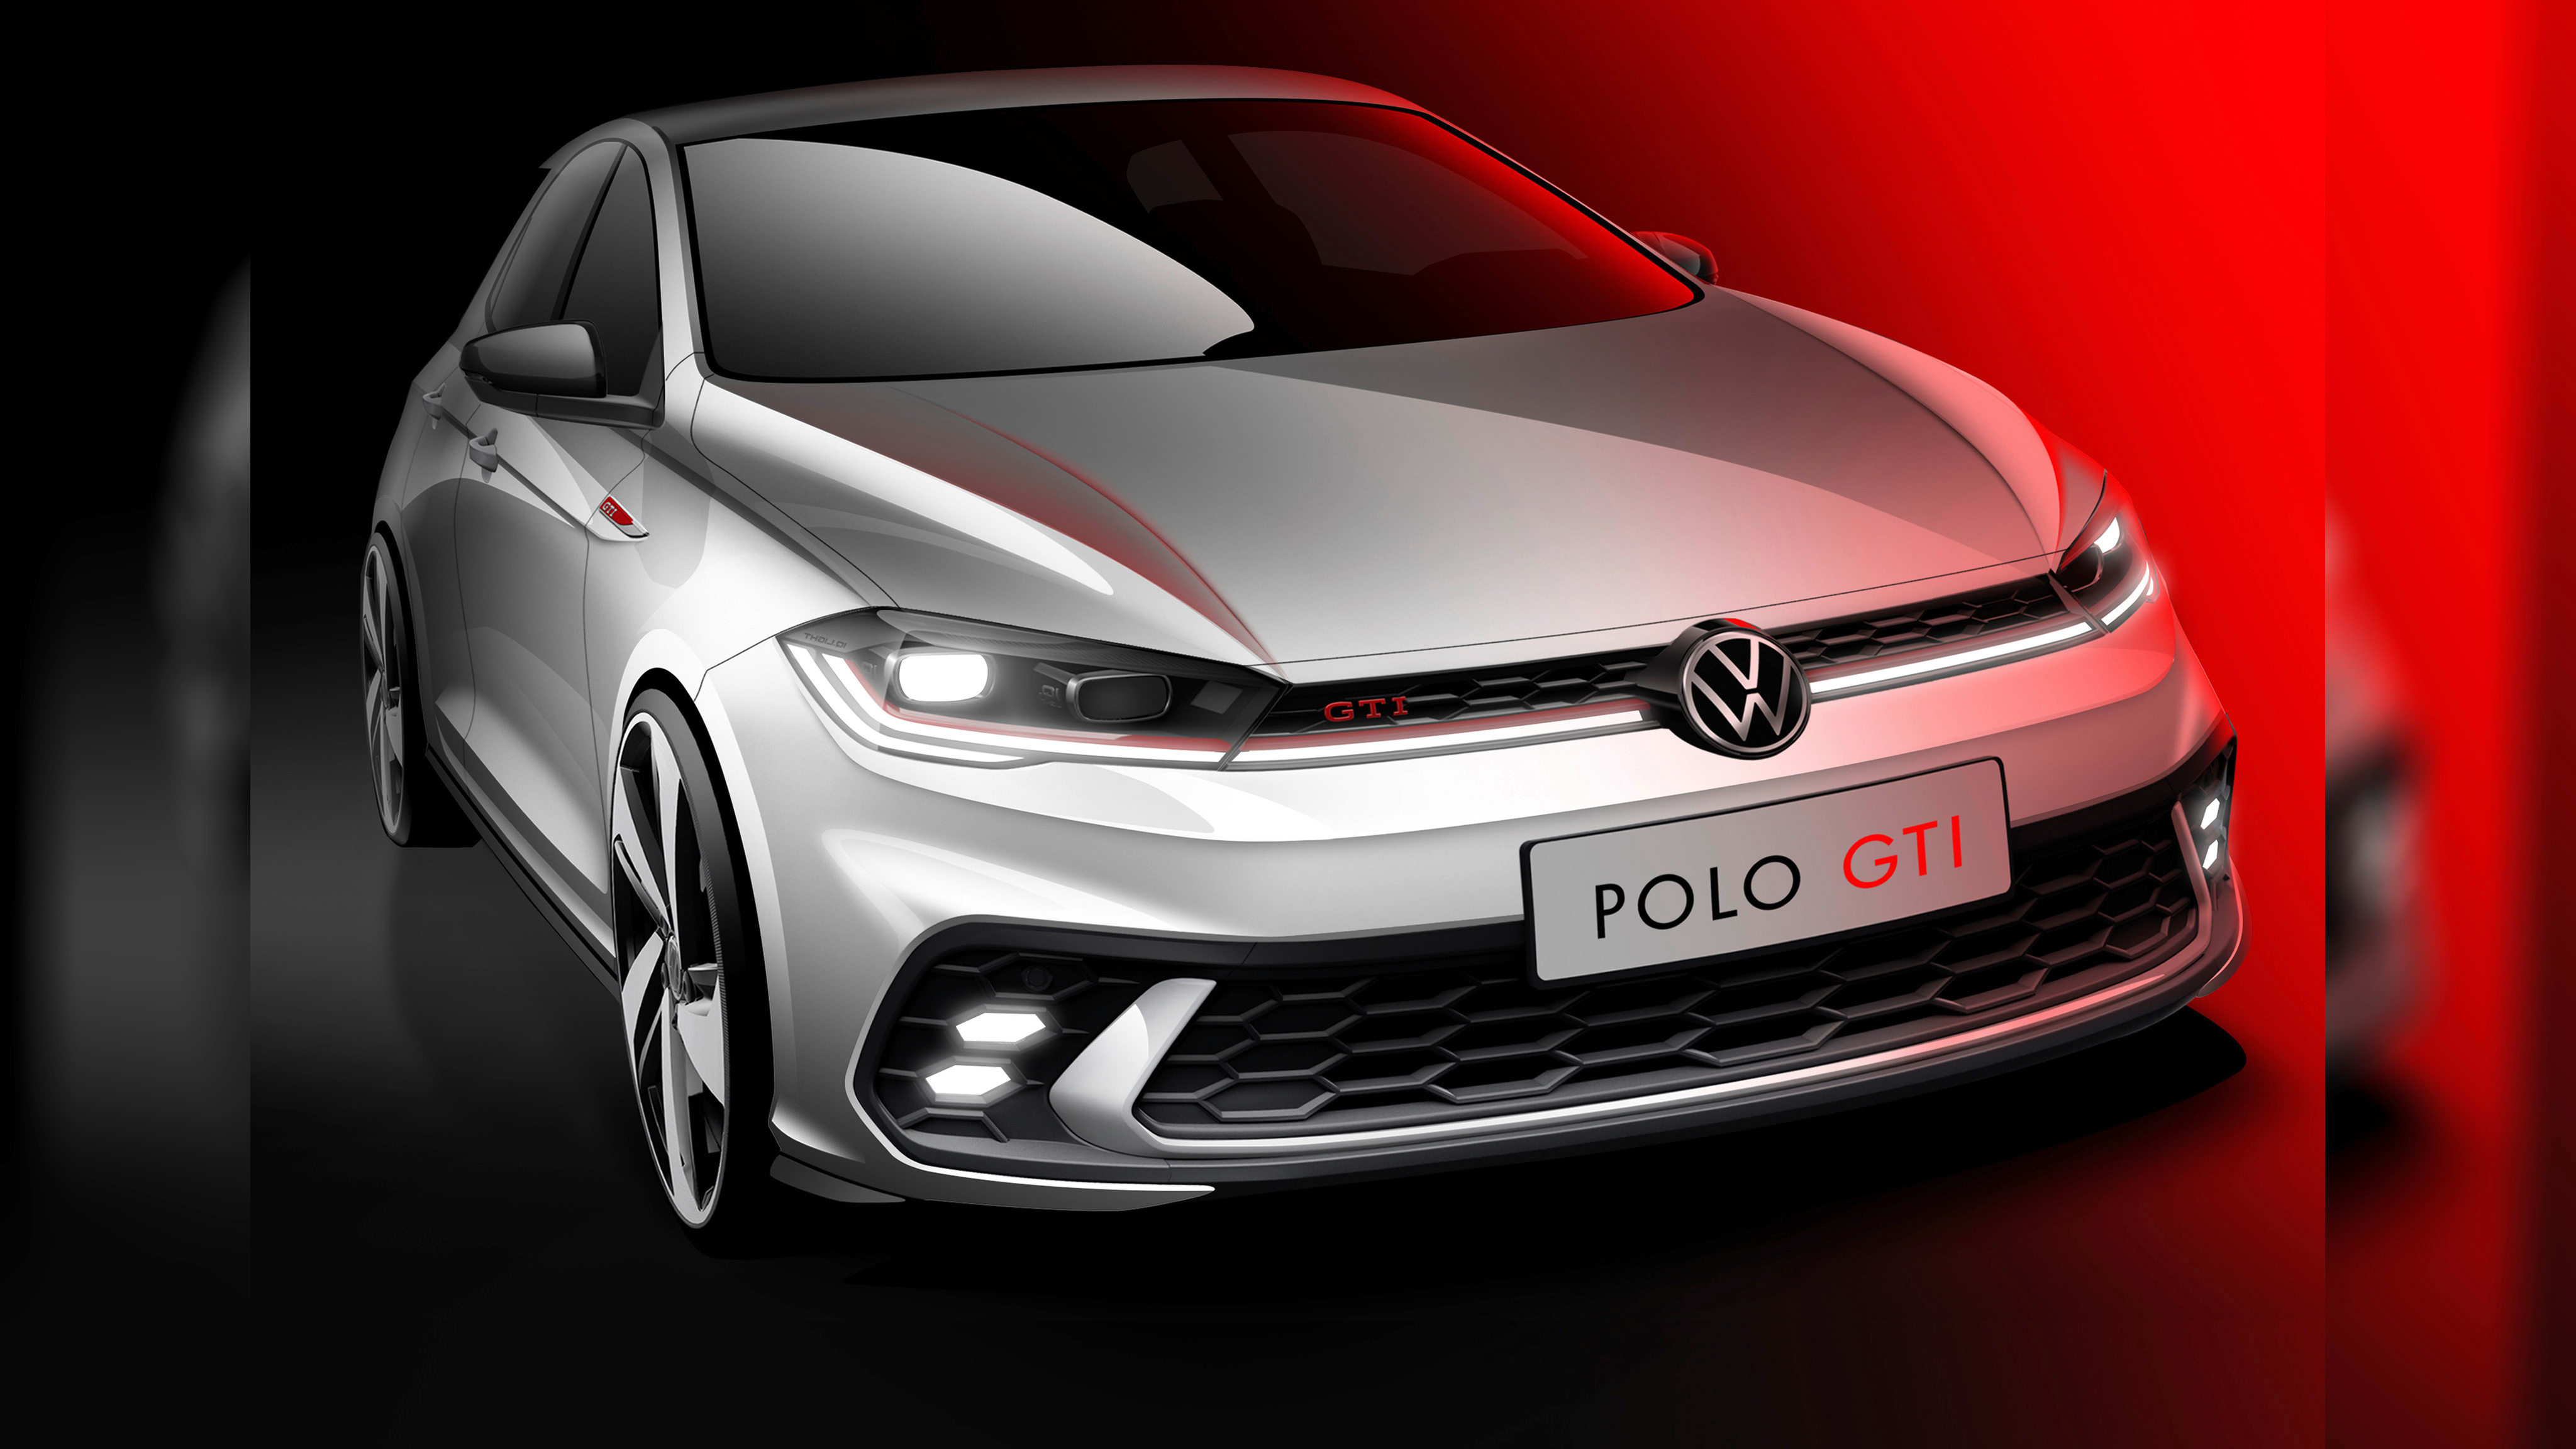  2022  Volkswagen Polo  GTI  facelift teased ahead of June 